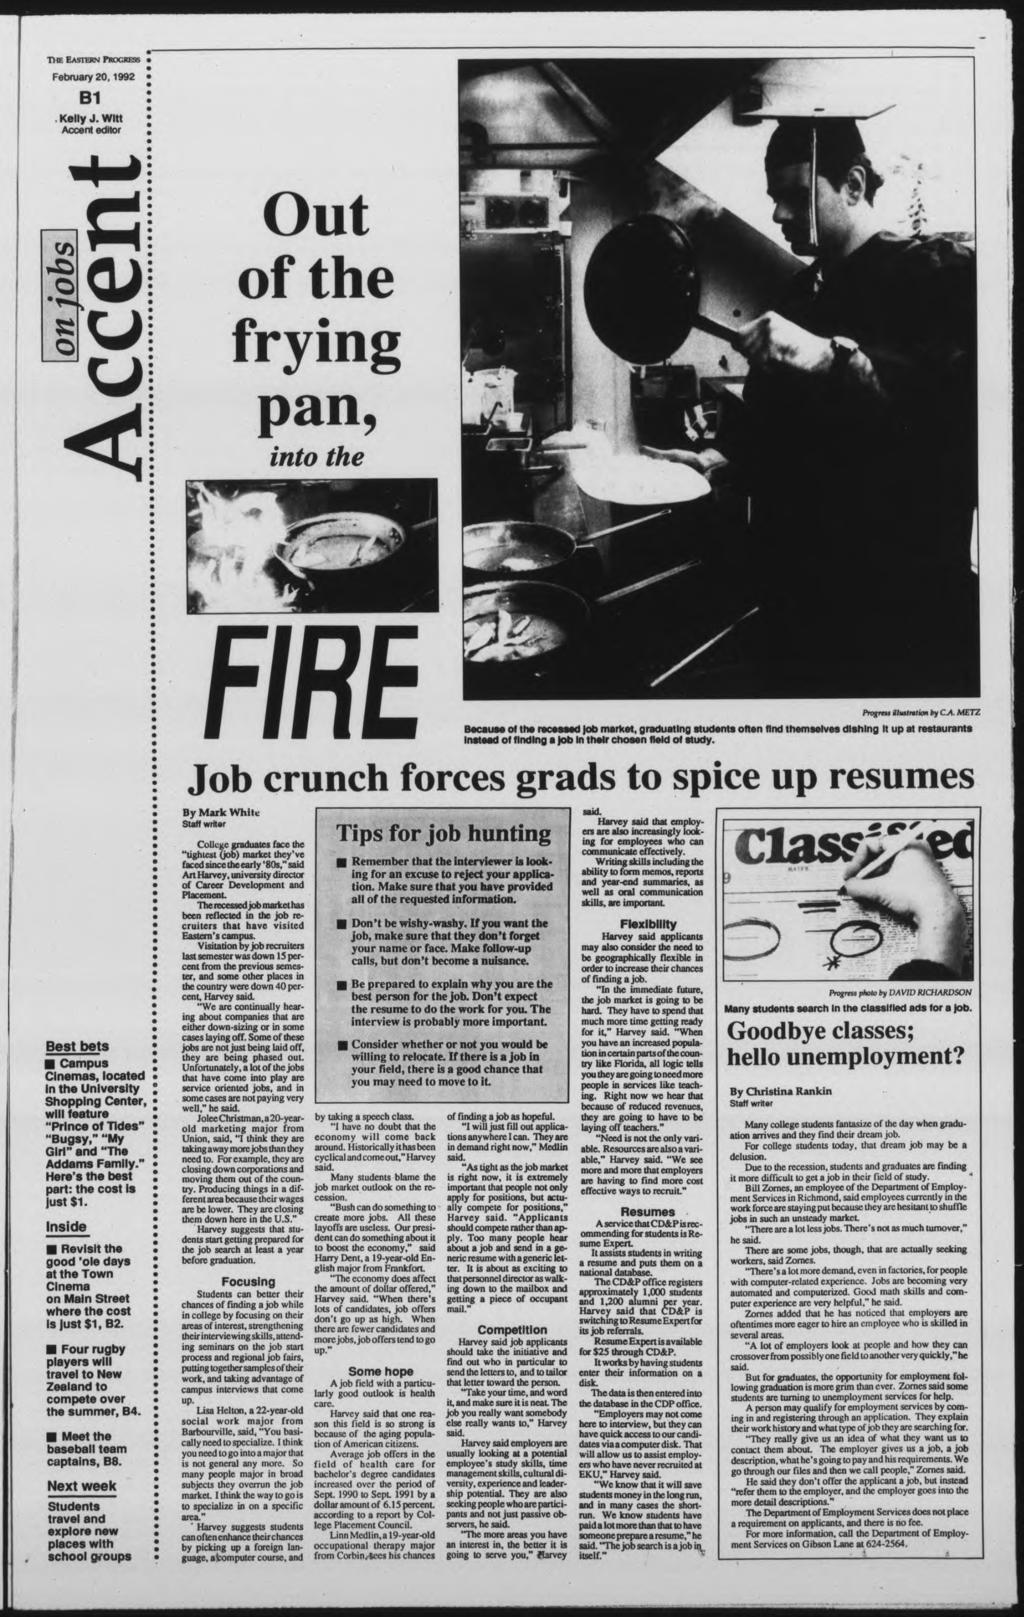 THE EASTERN PROGRESS February 20,1992 B1.Kelly J.Wtt Accent edtor Out of the fryng Progress lustrtton by CA.